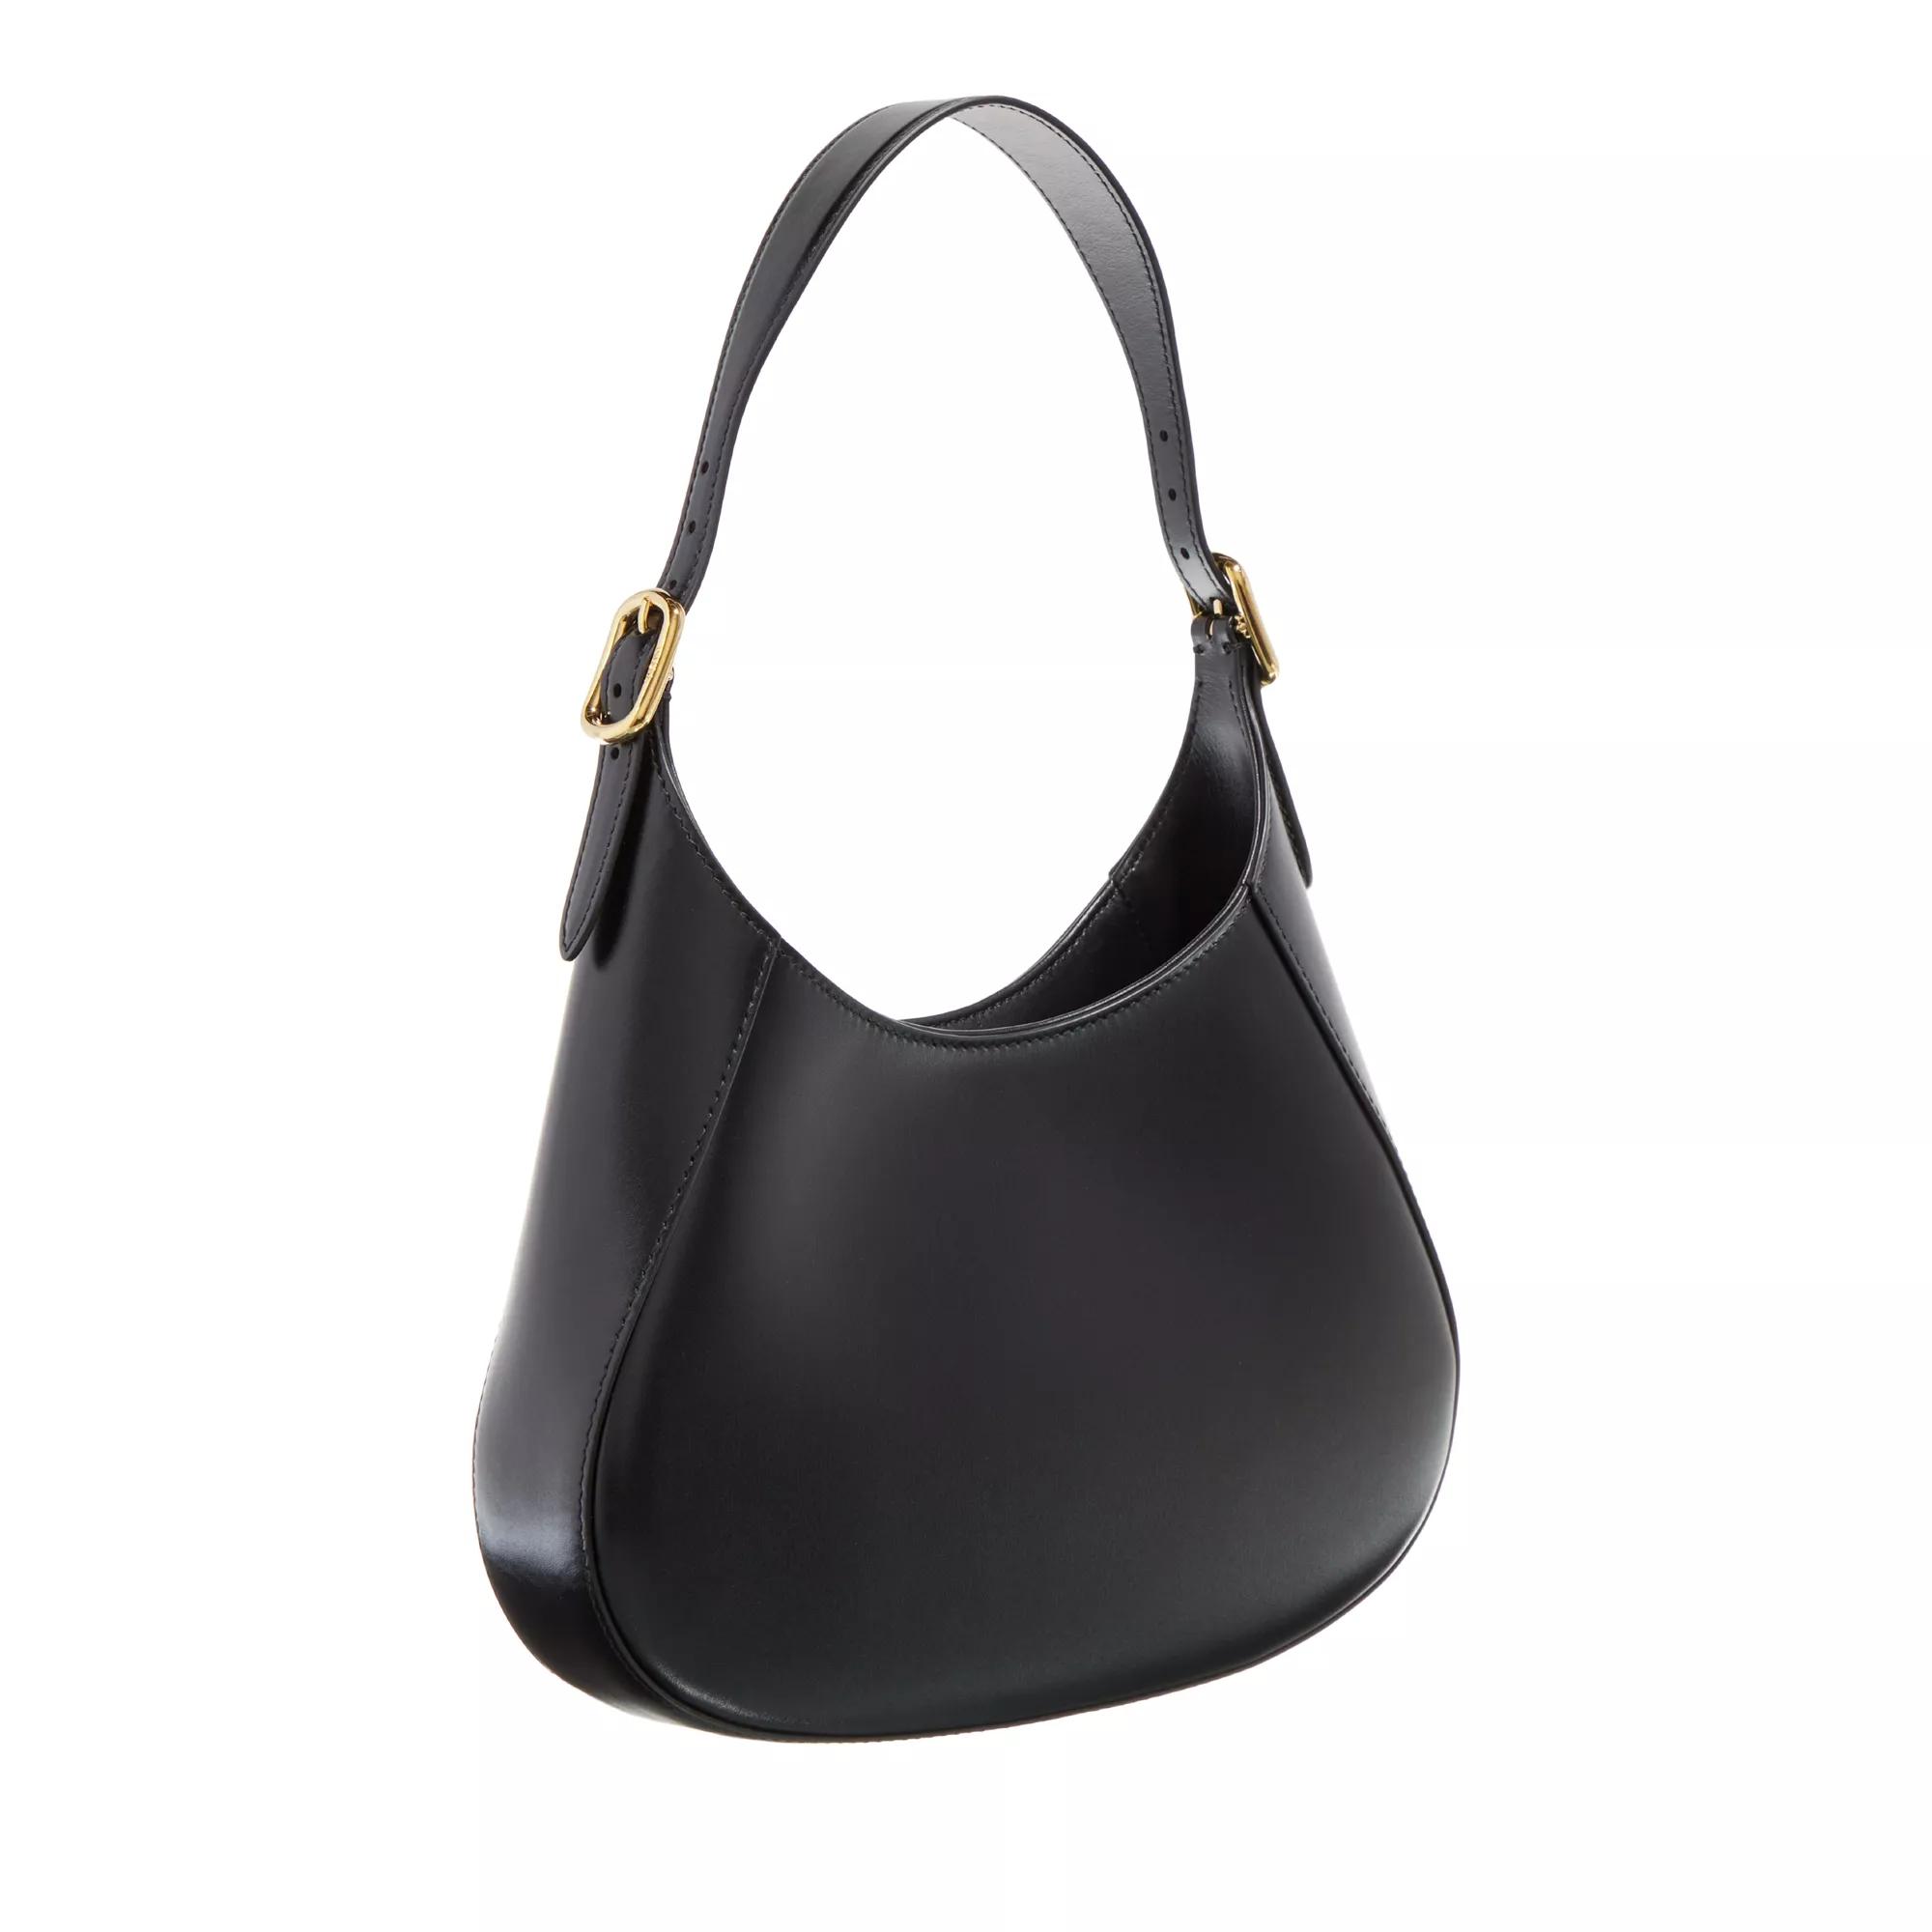 Prada Hobo bags Leather Shoulder Bag in zwart